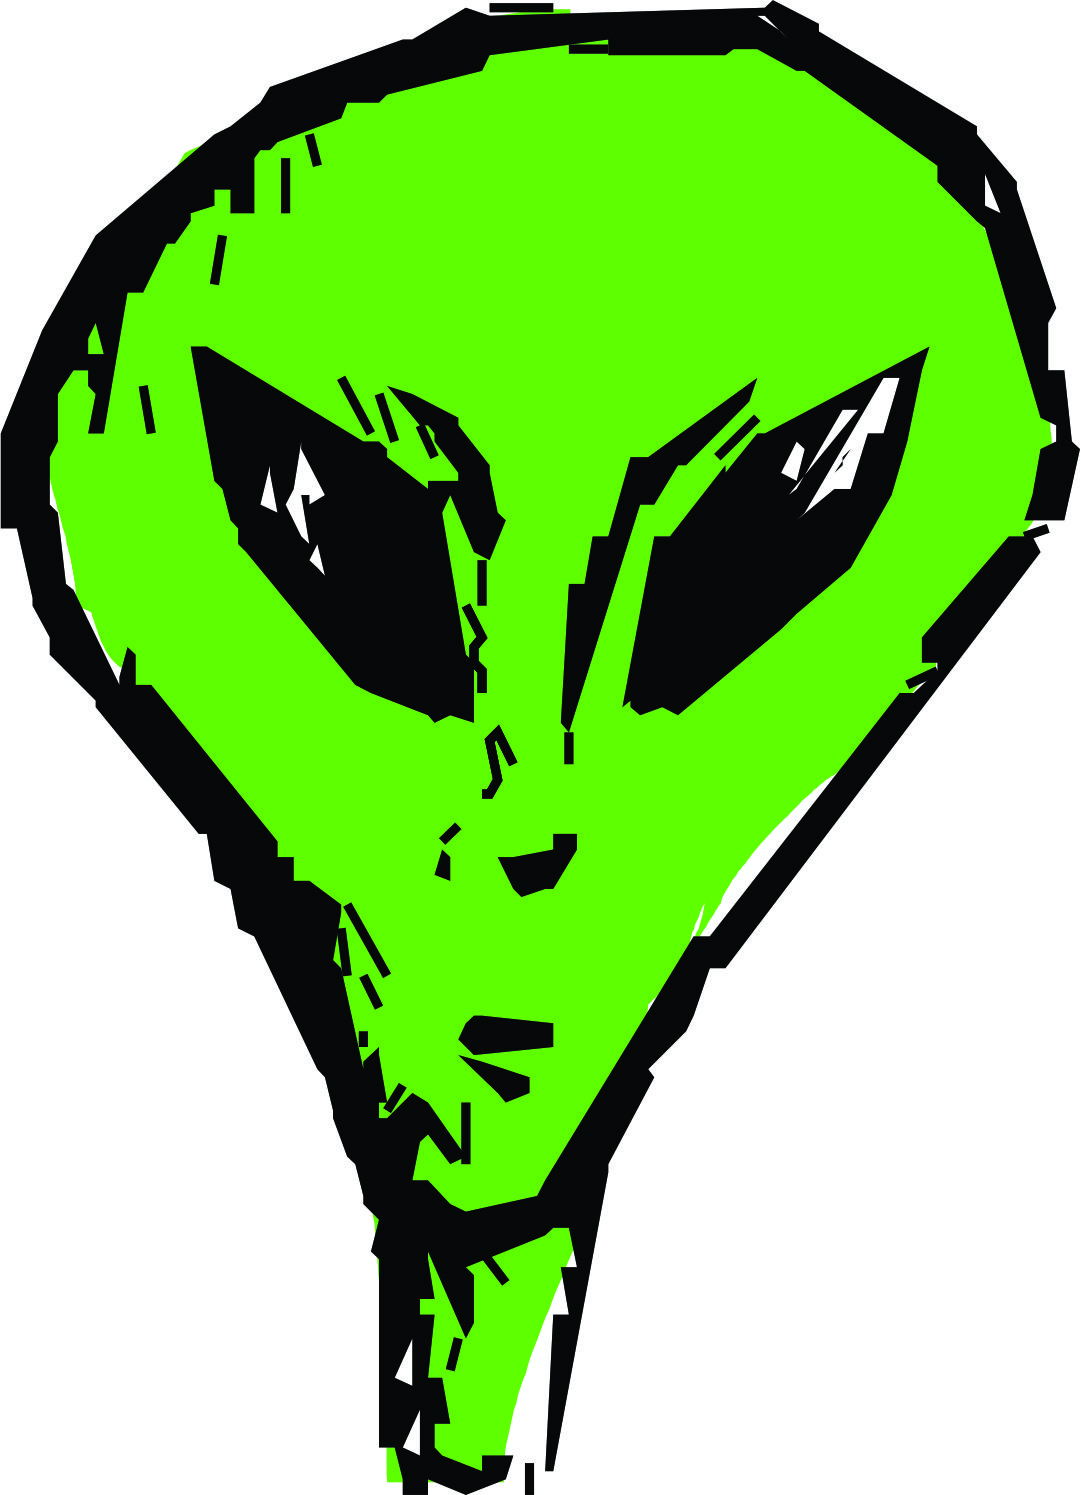 Green Alien Cartoon Images & Pictures - Becuo